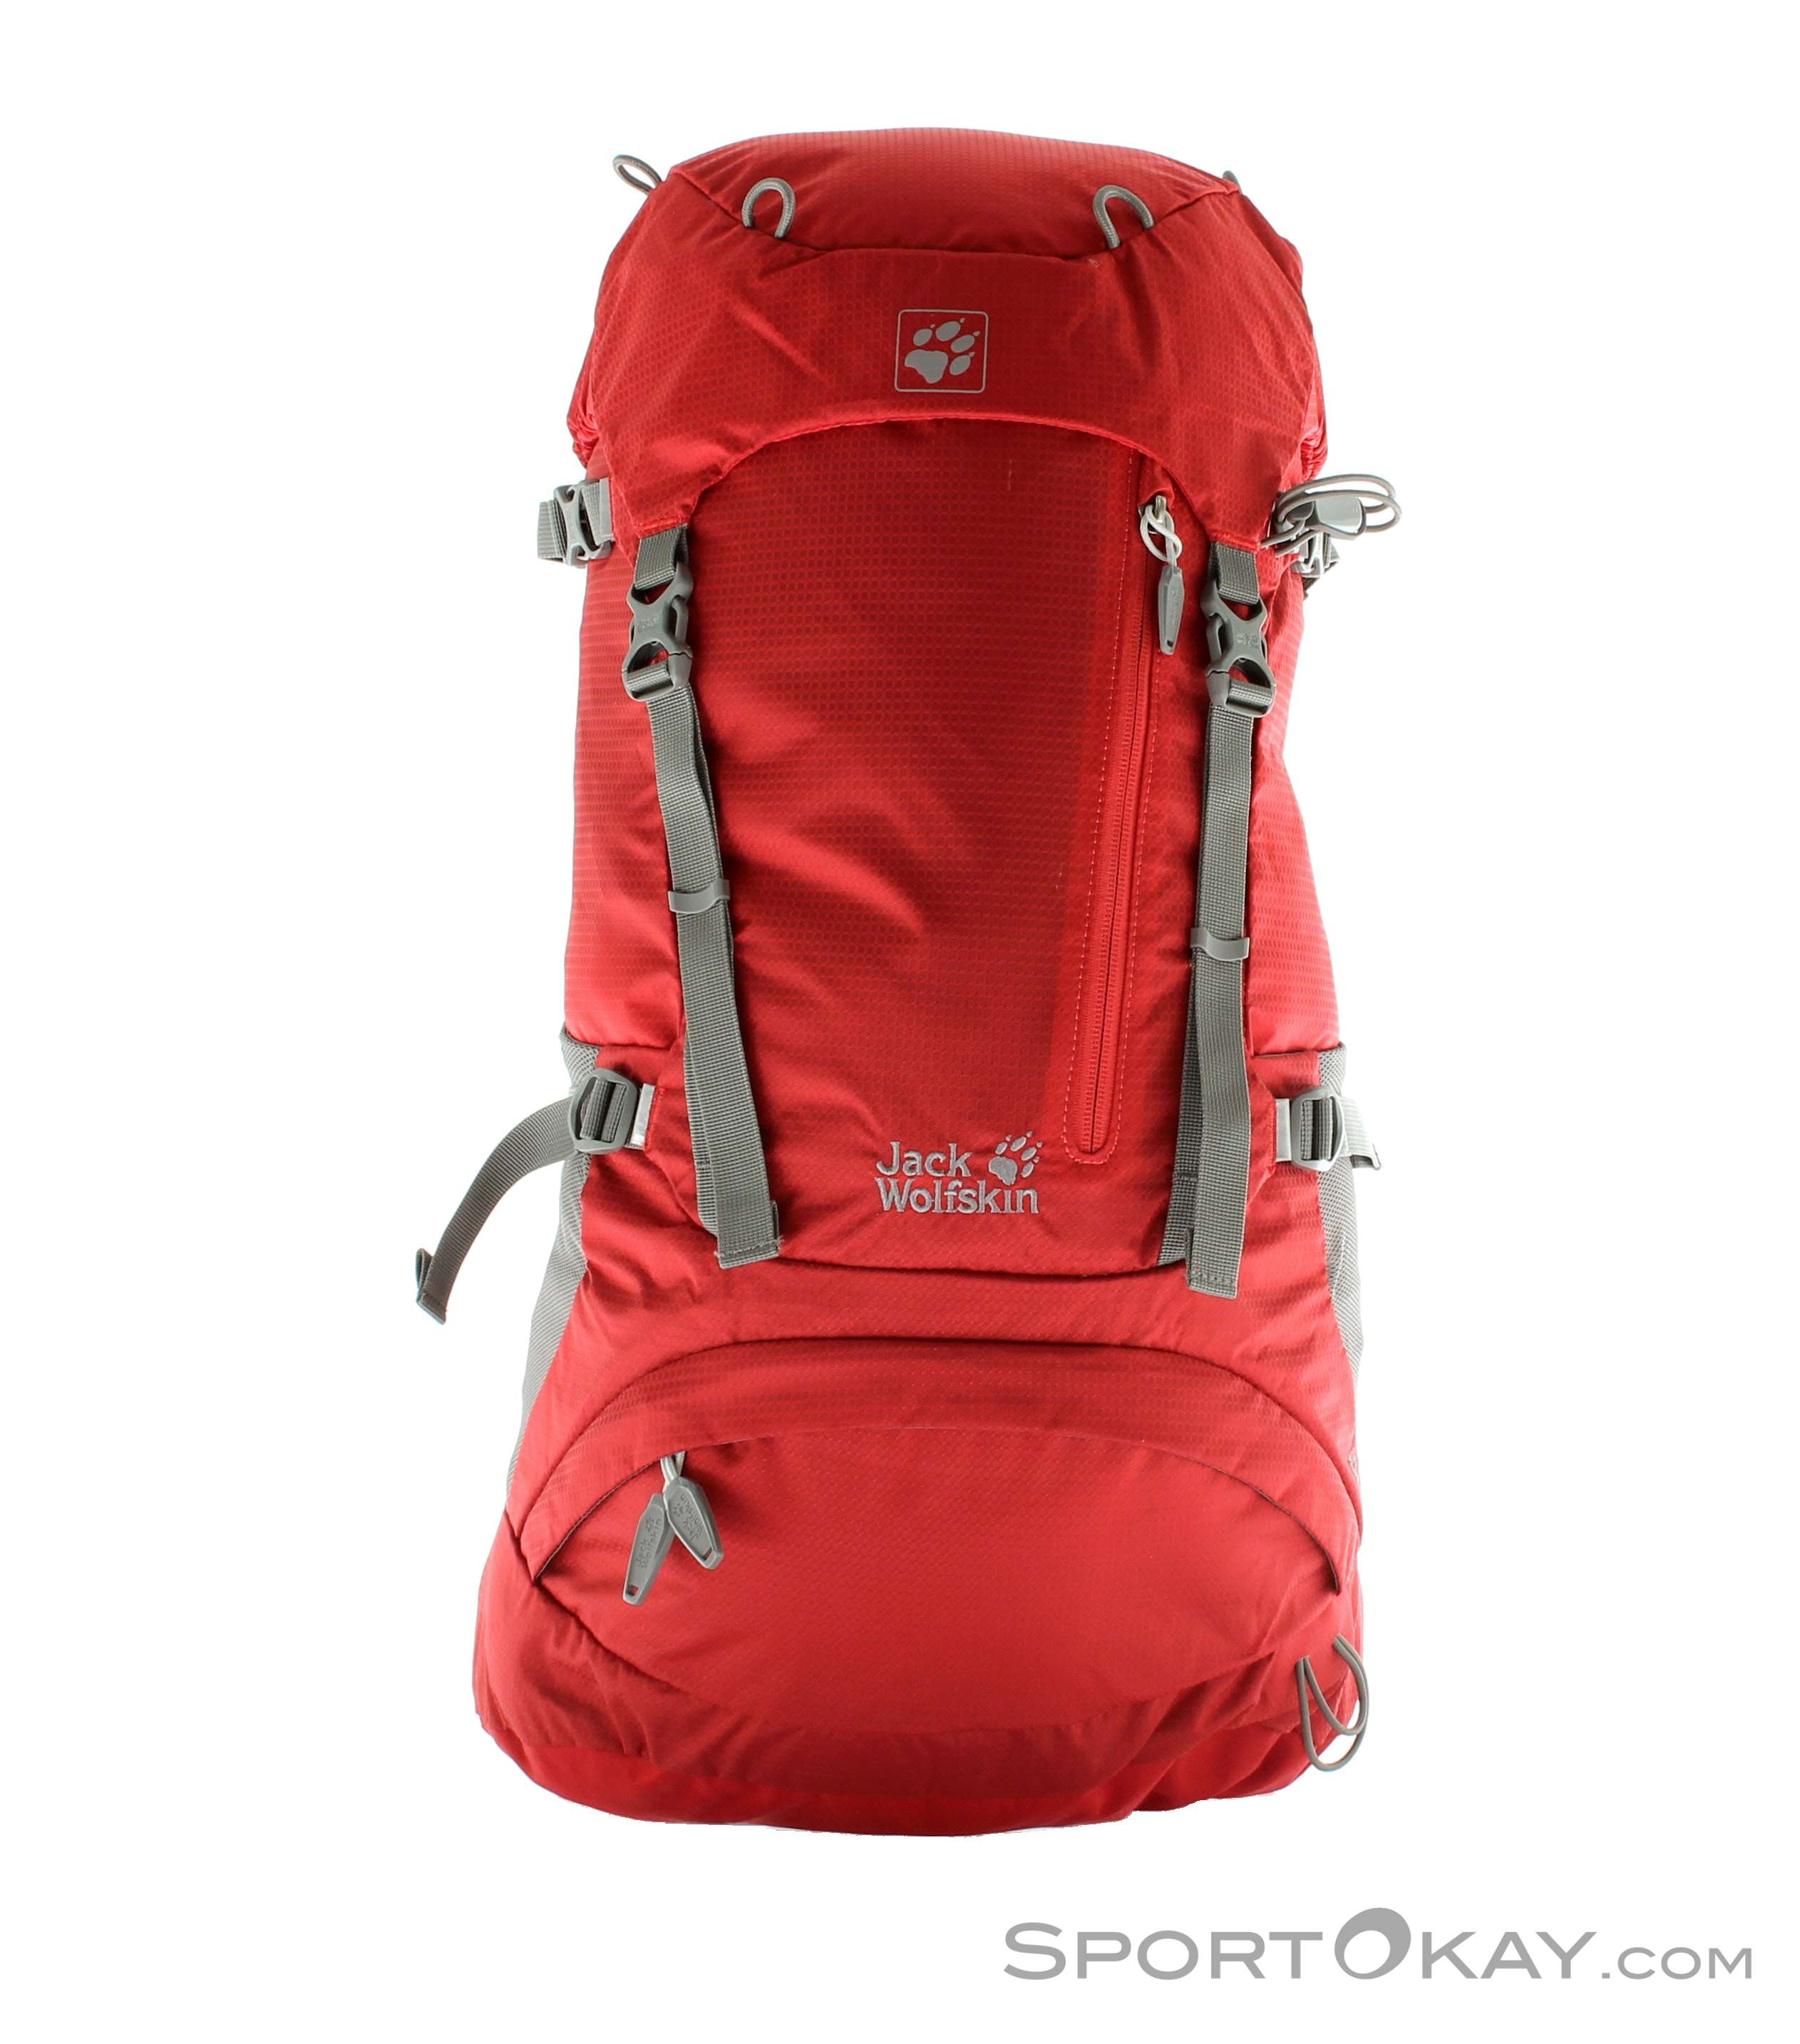 Jack Wolfskin Hike 26l Pack Backpack - Backpacks - Backpacks Headlamps - Outdoor - All